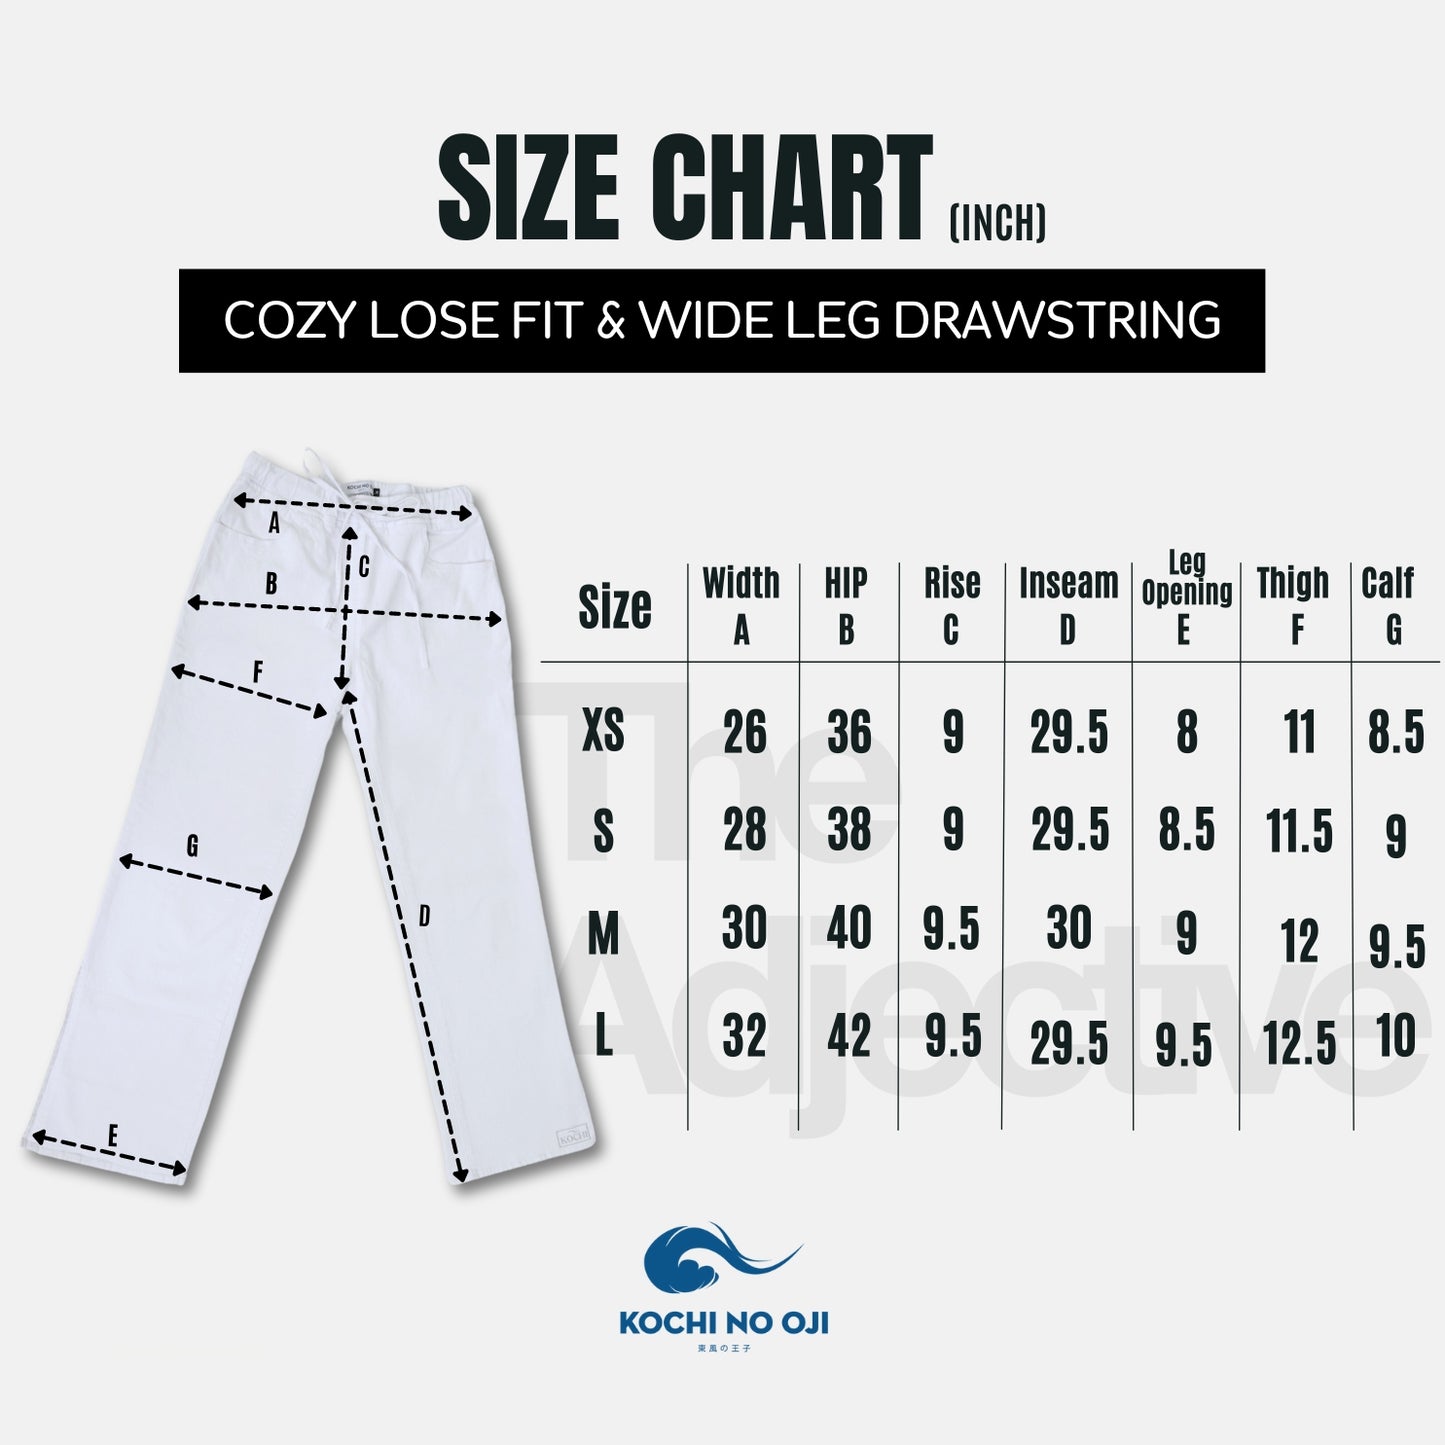 Cozy Lose Fit & Wide Leg Drawstring | Kochi No Oji